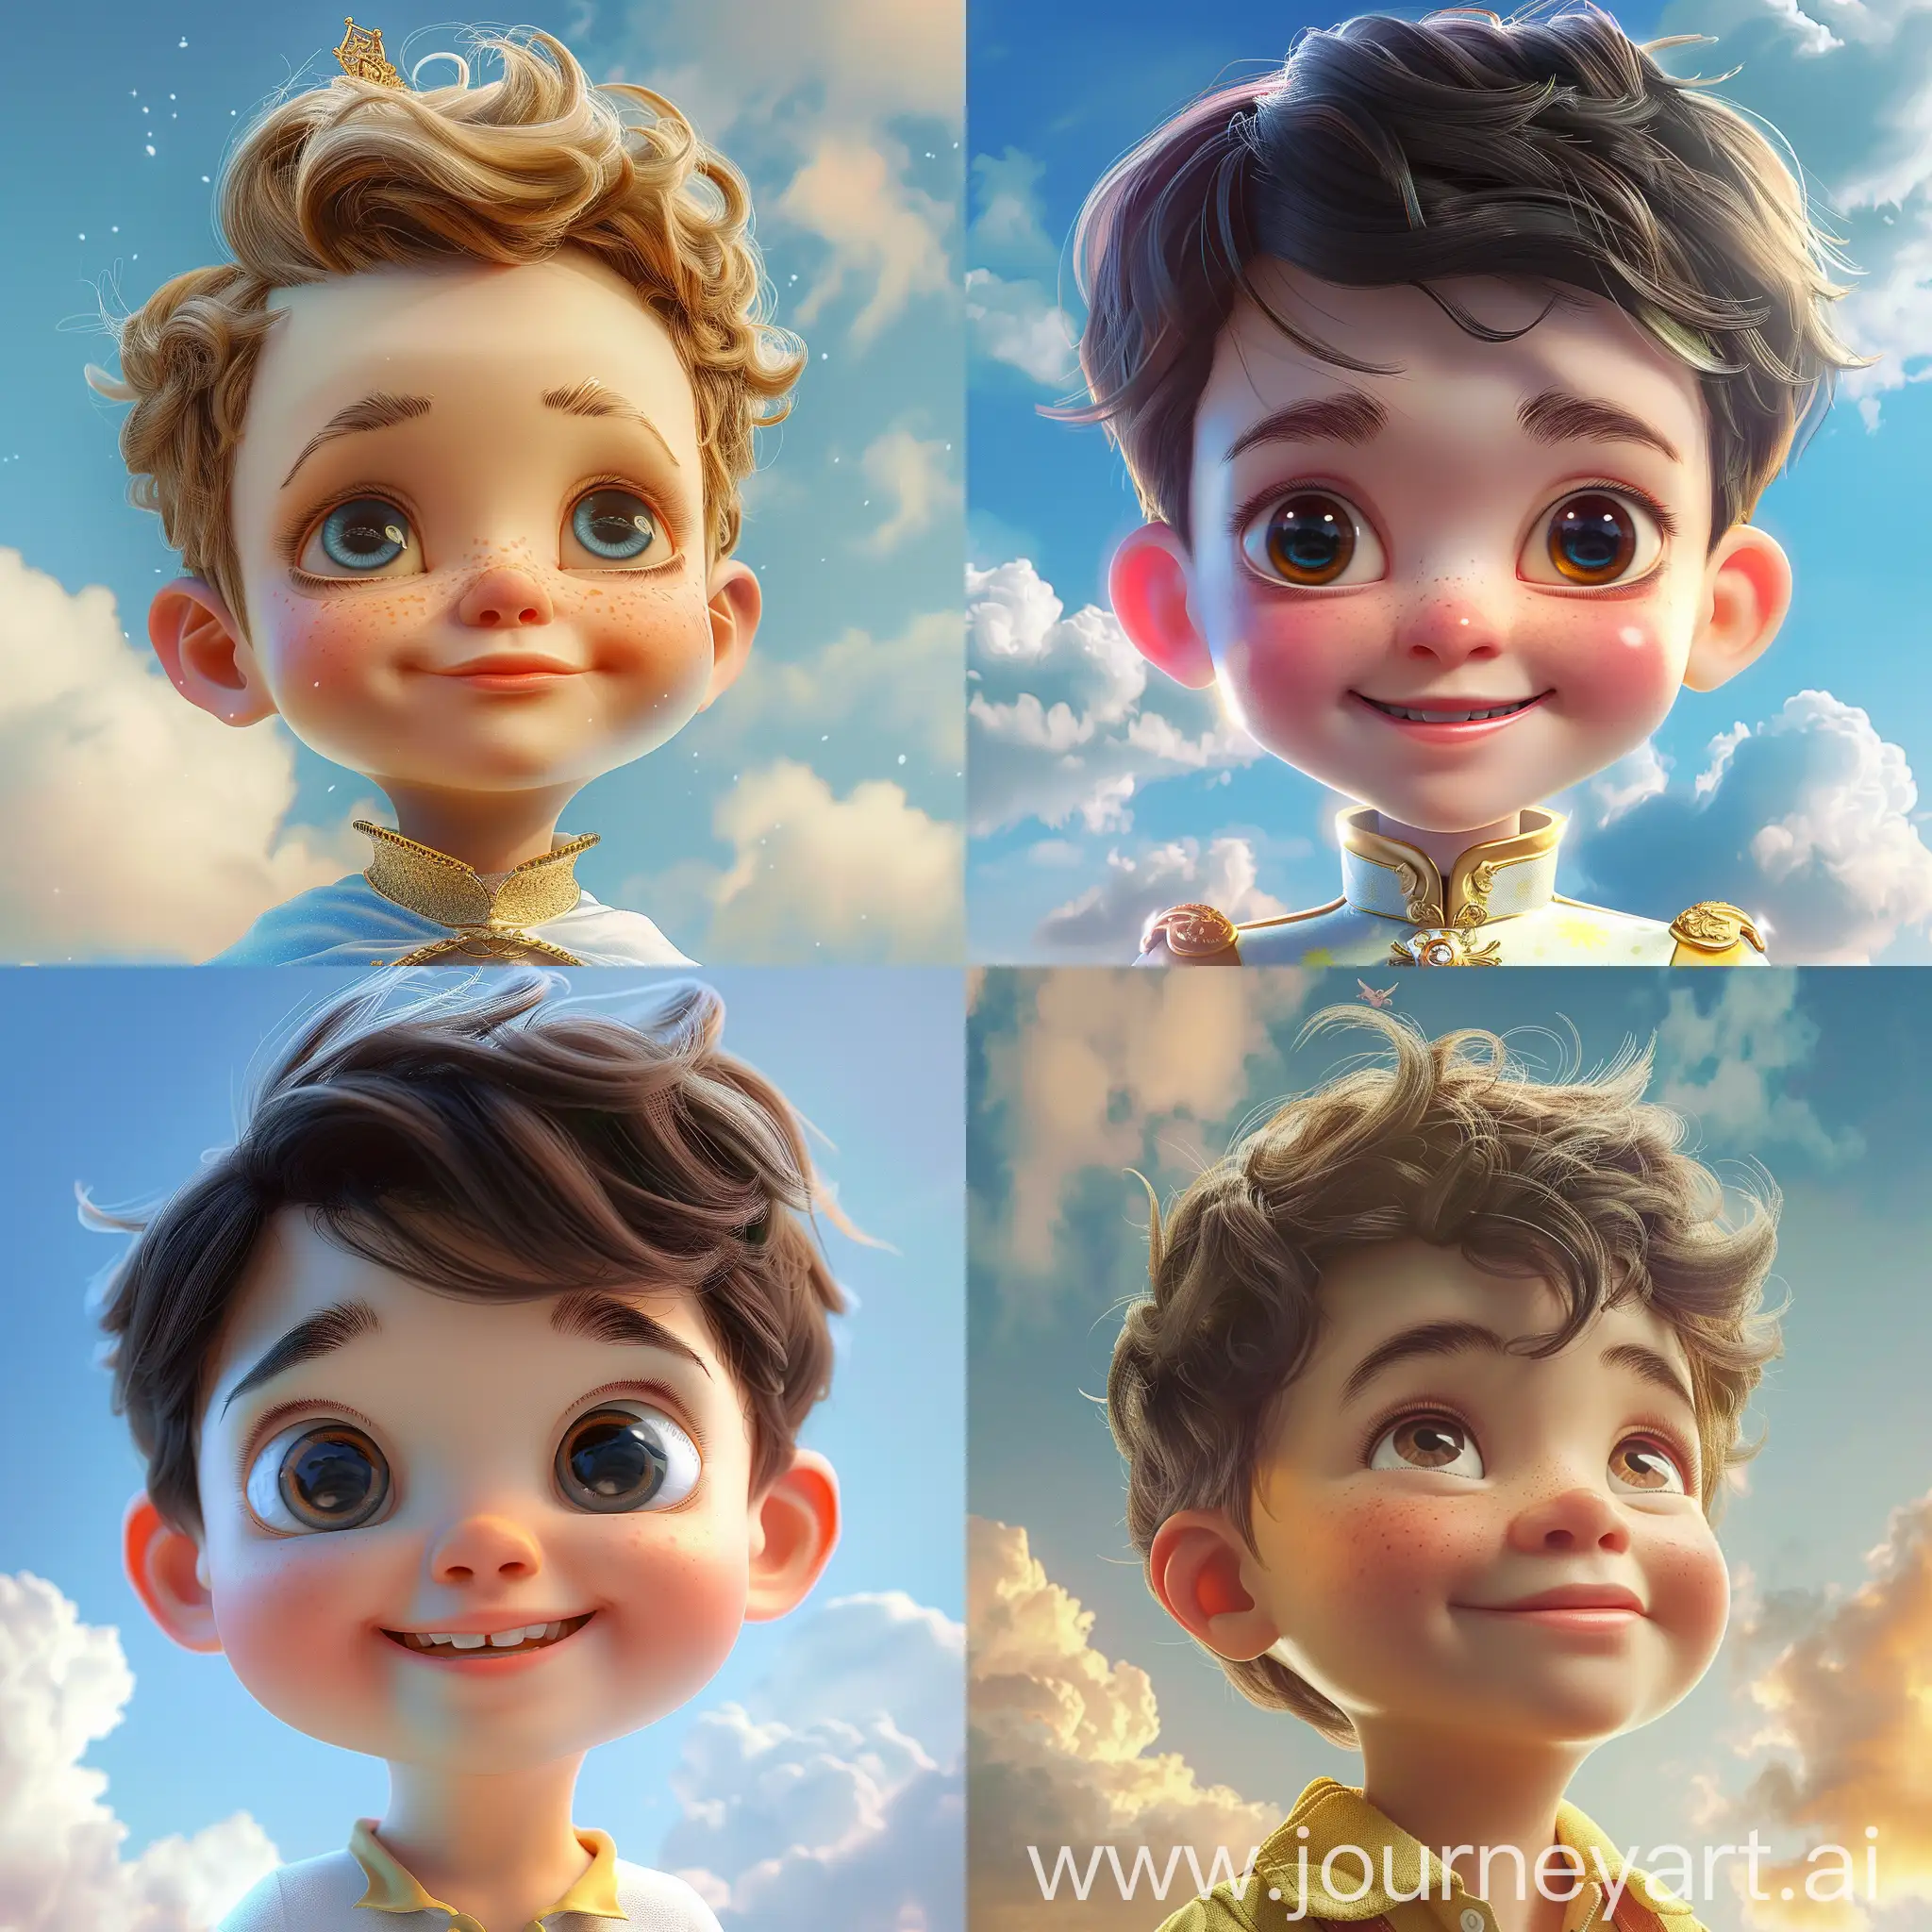 Enchanting-Disney-Prince-Portrait-under-Vibrant-Sky